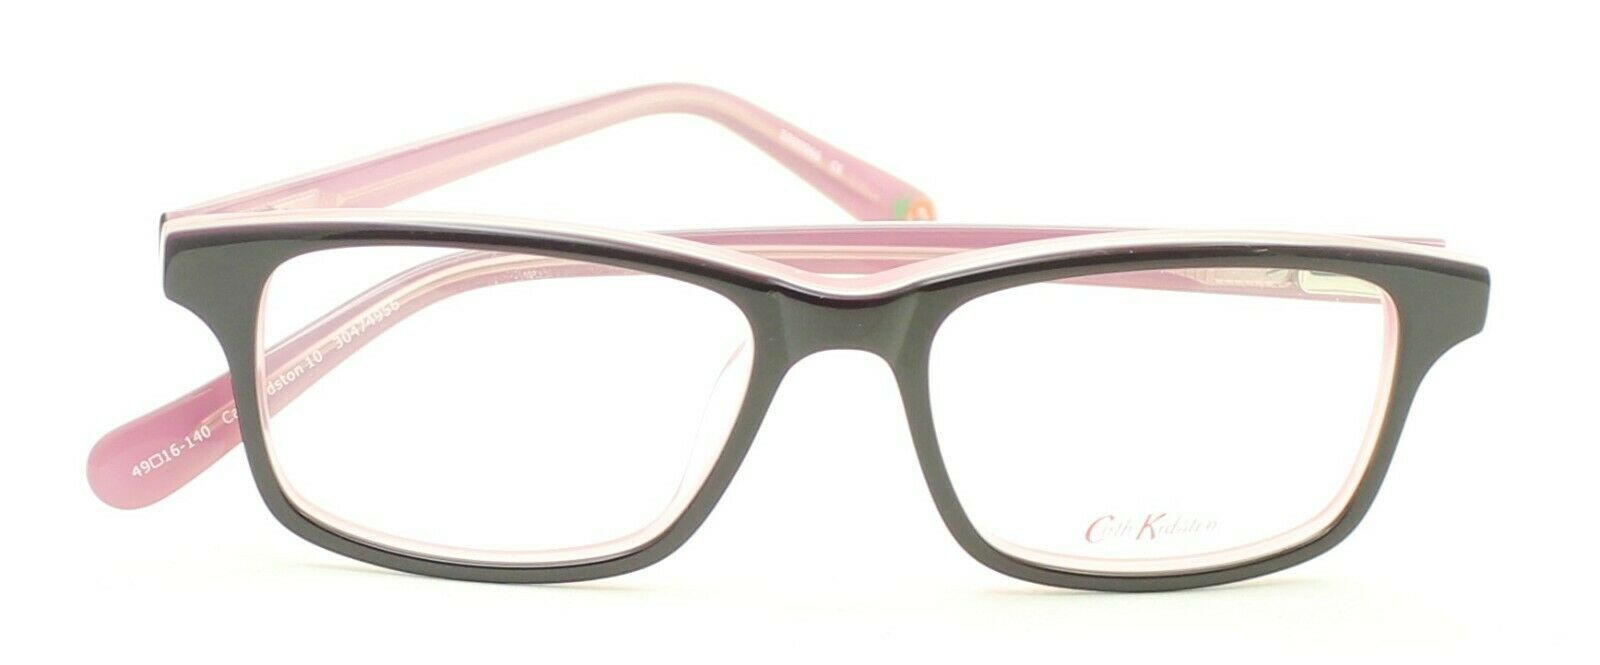 Cath Kidston 10 30474956 49mm FRAMES Glasses RX Optical Eyewear Eyeglasses - New